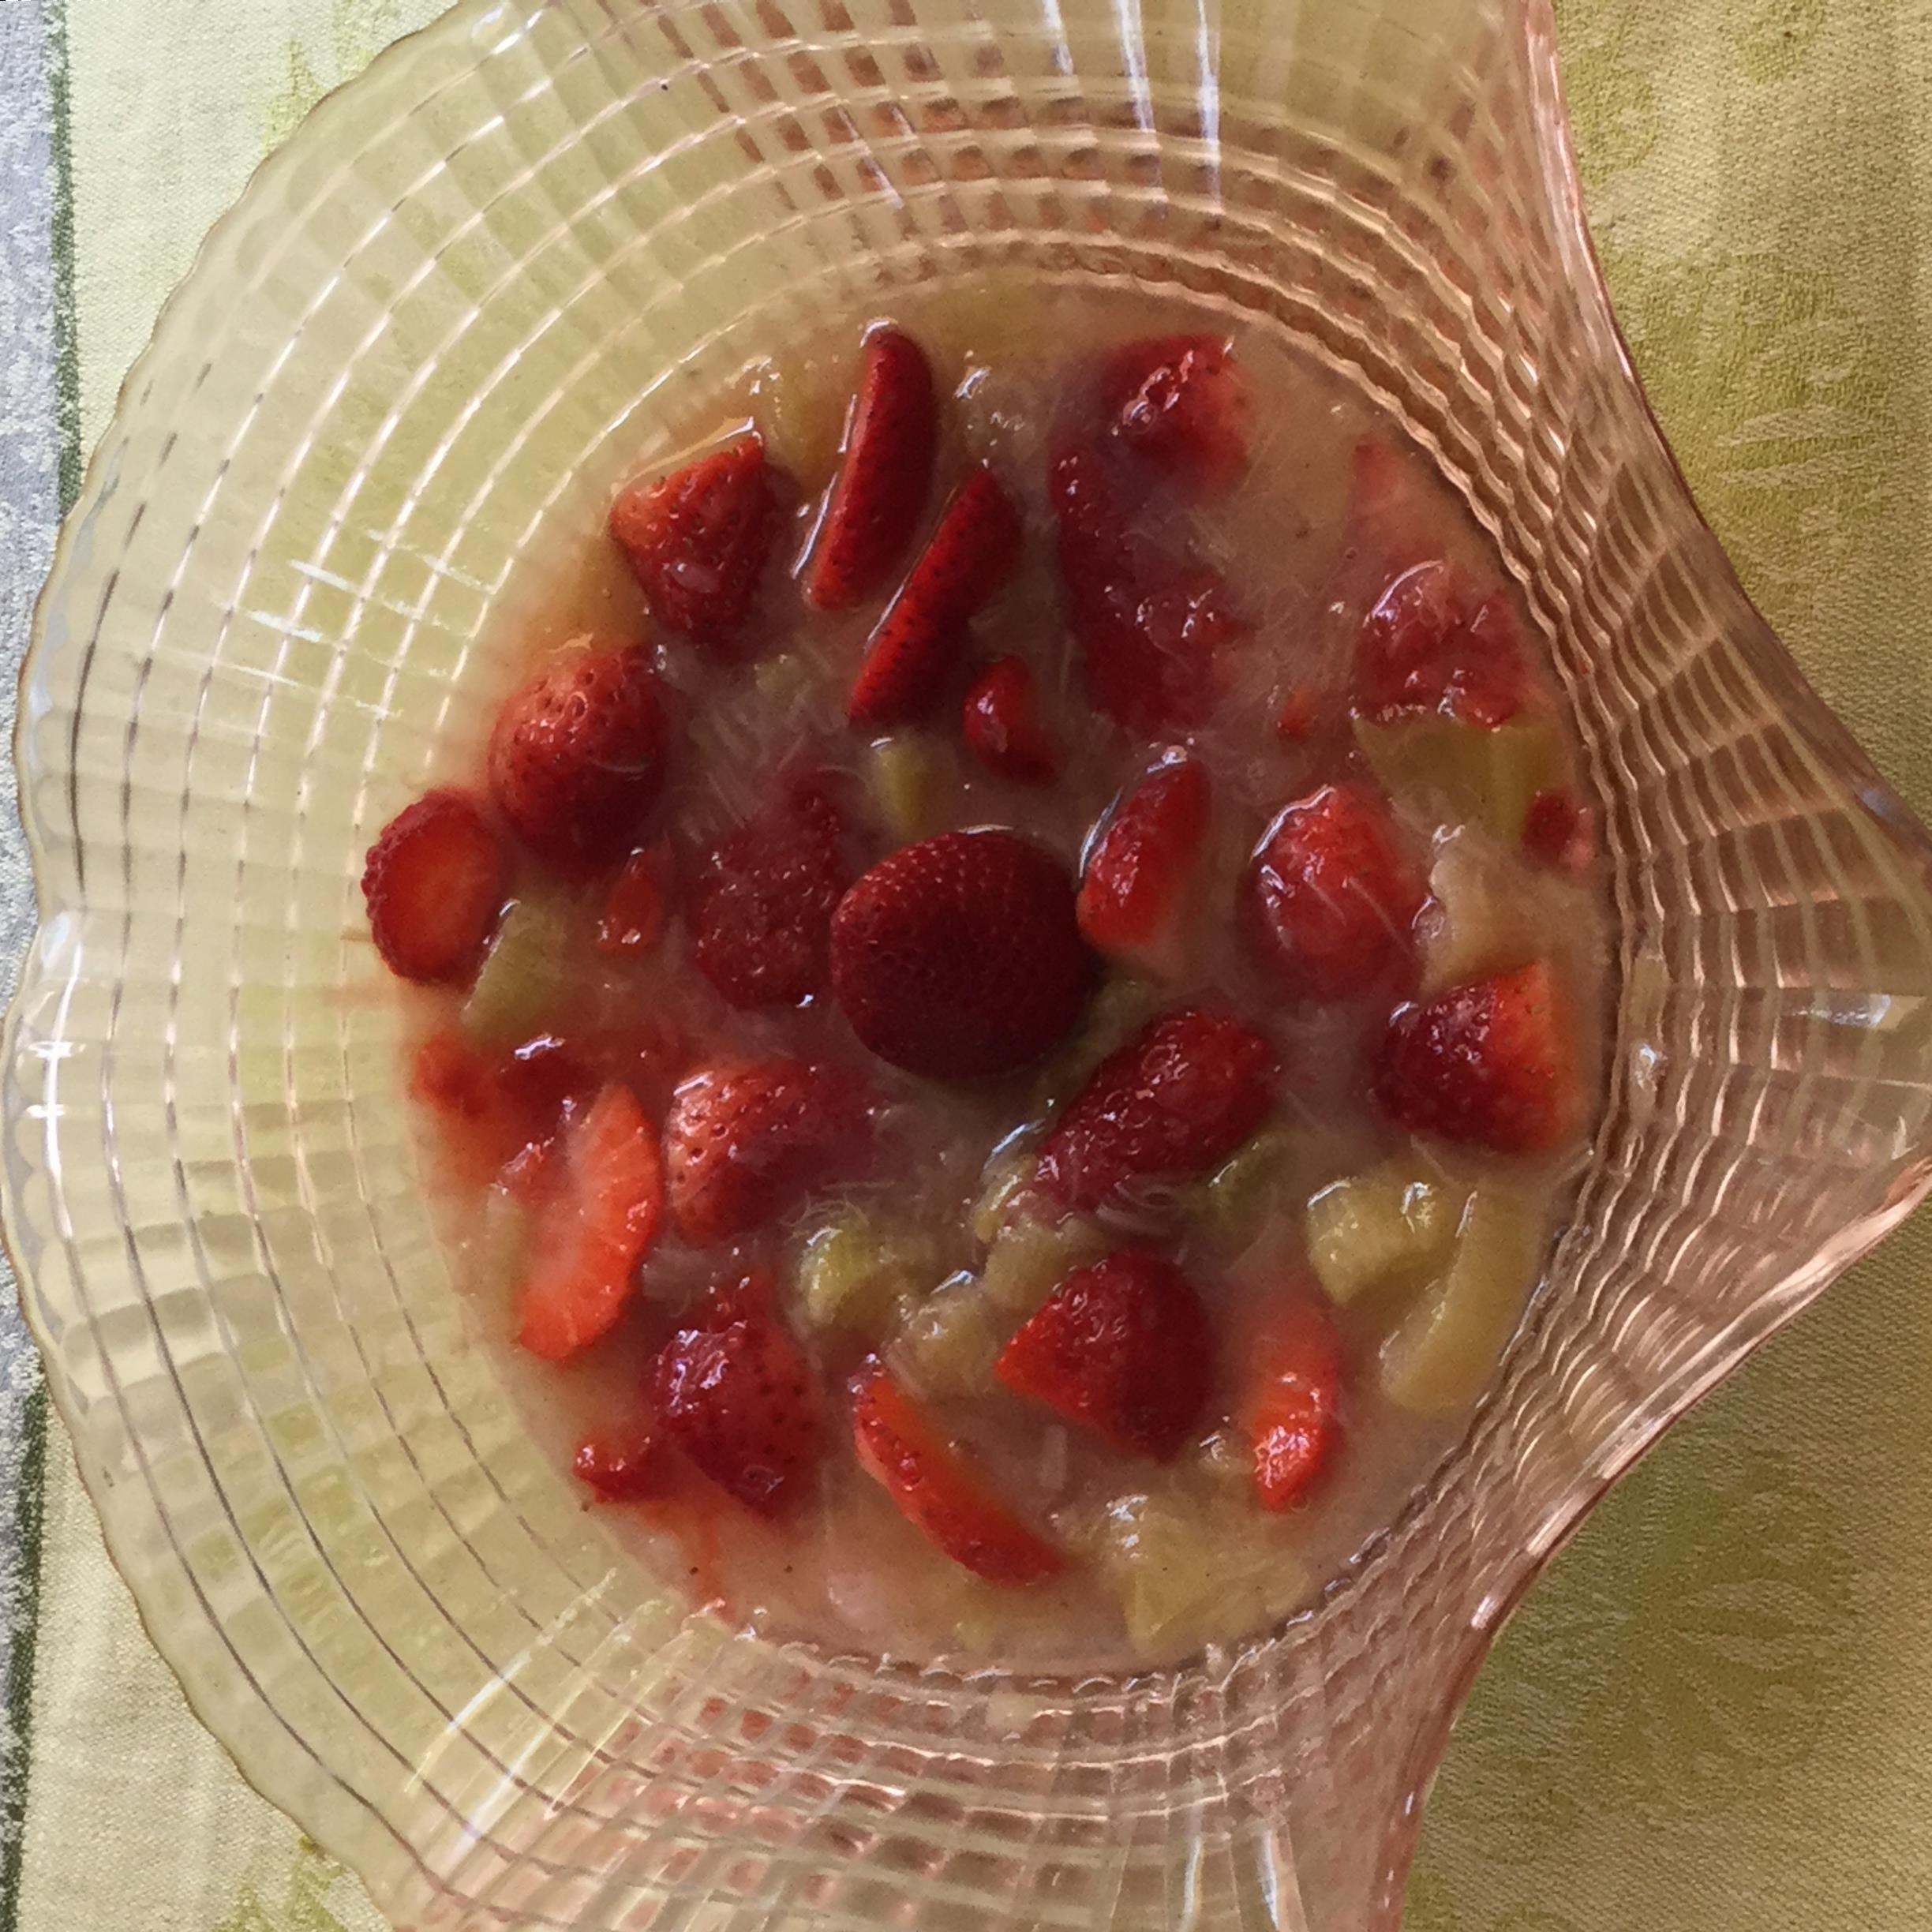 Rhubarb-Strawberry Compote